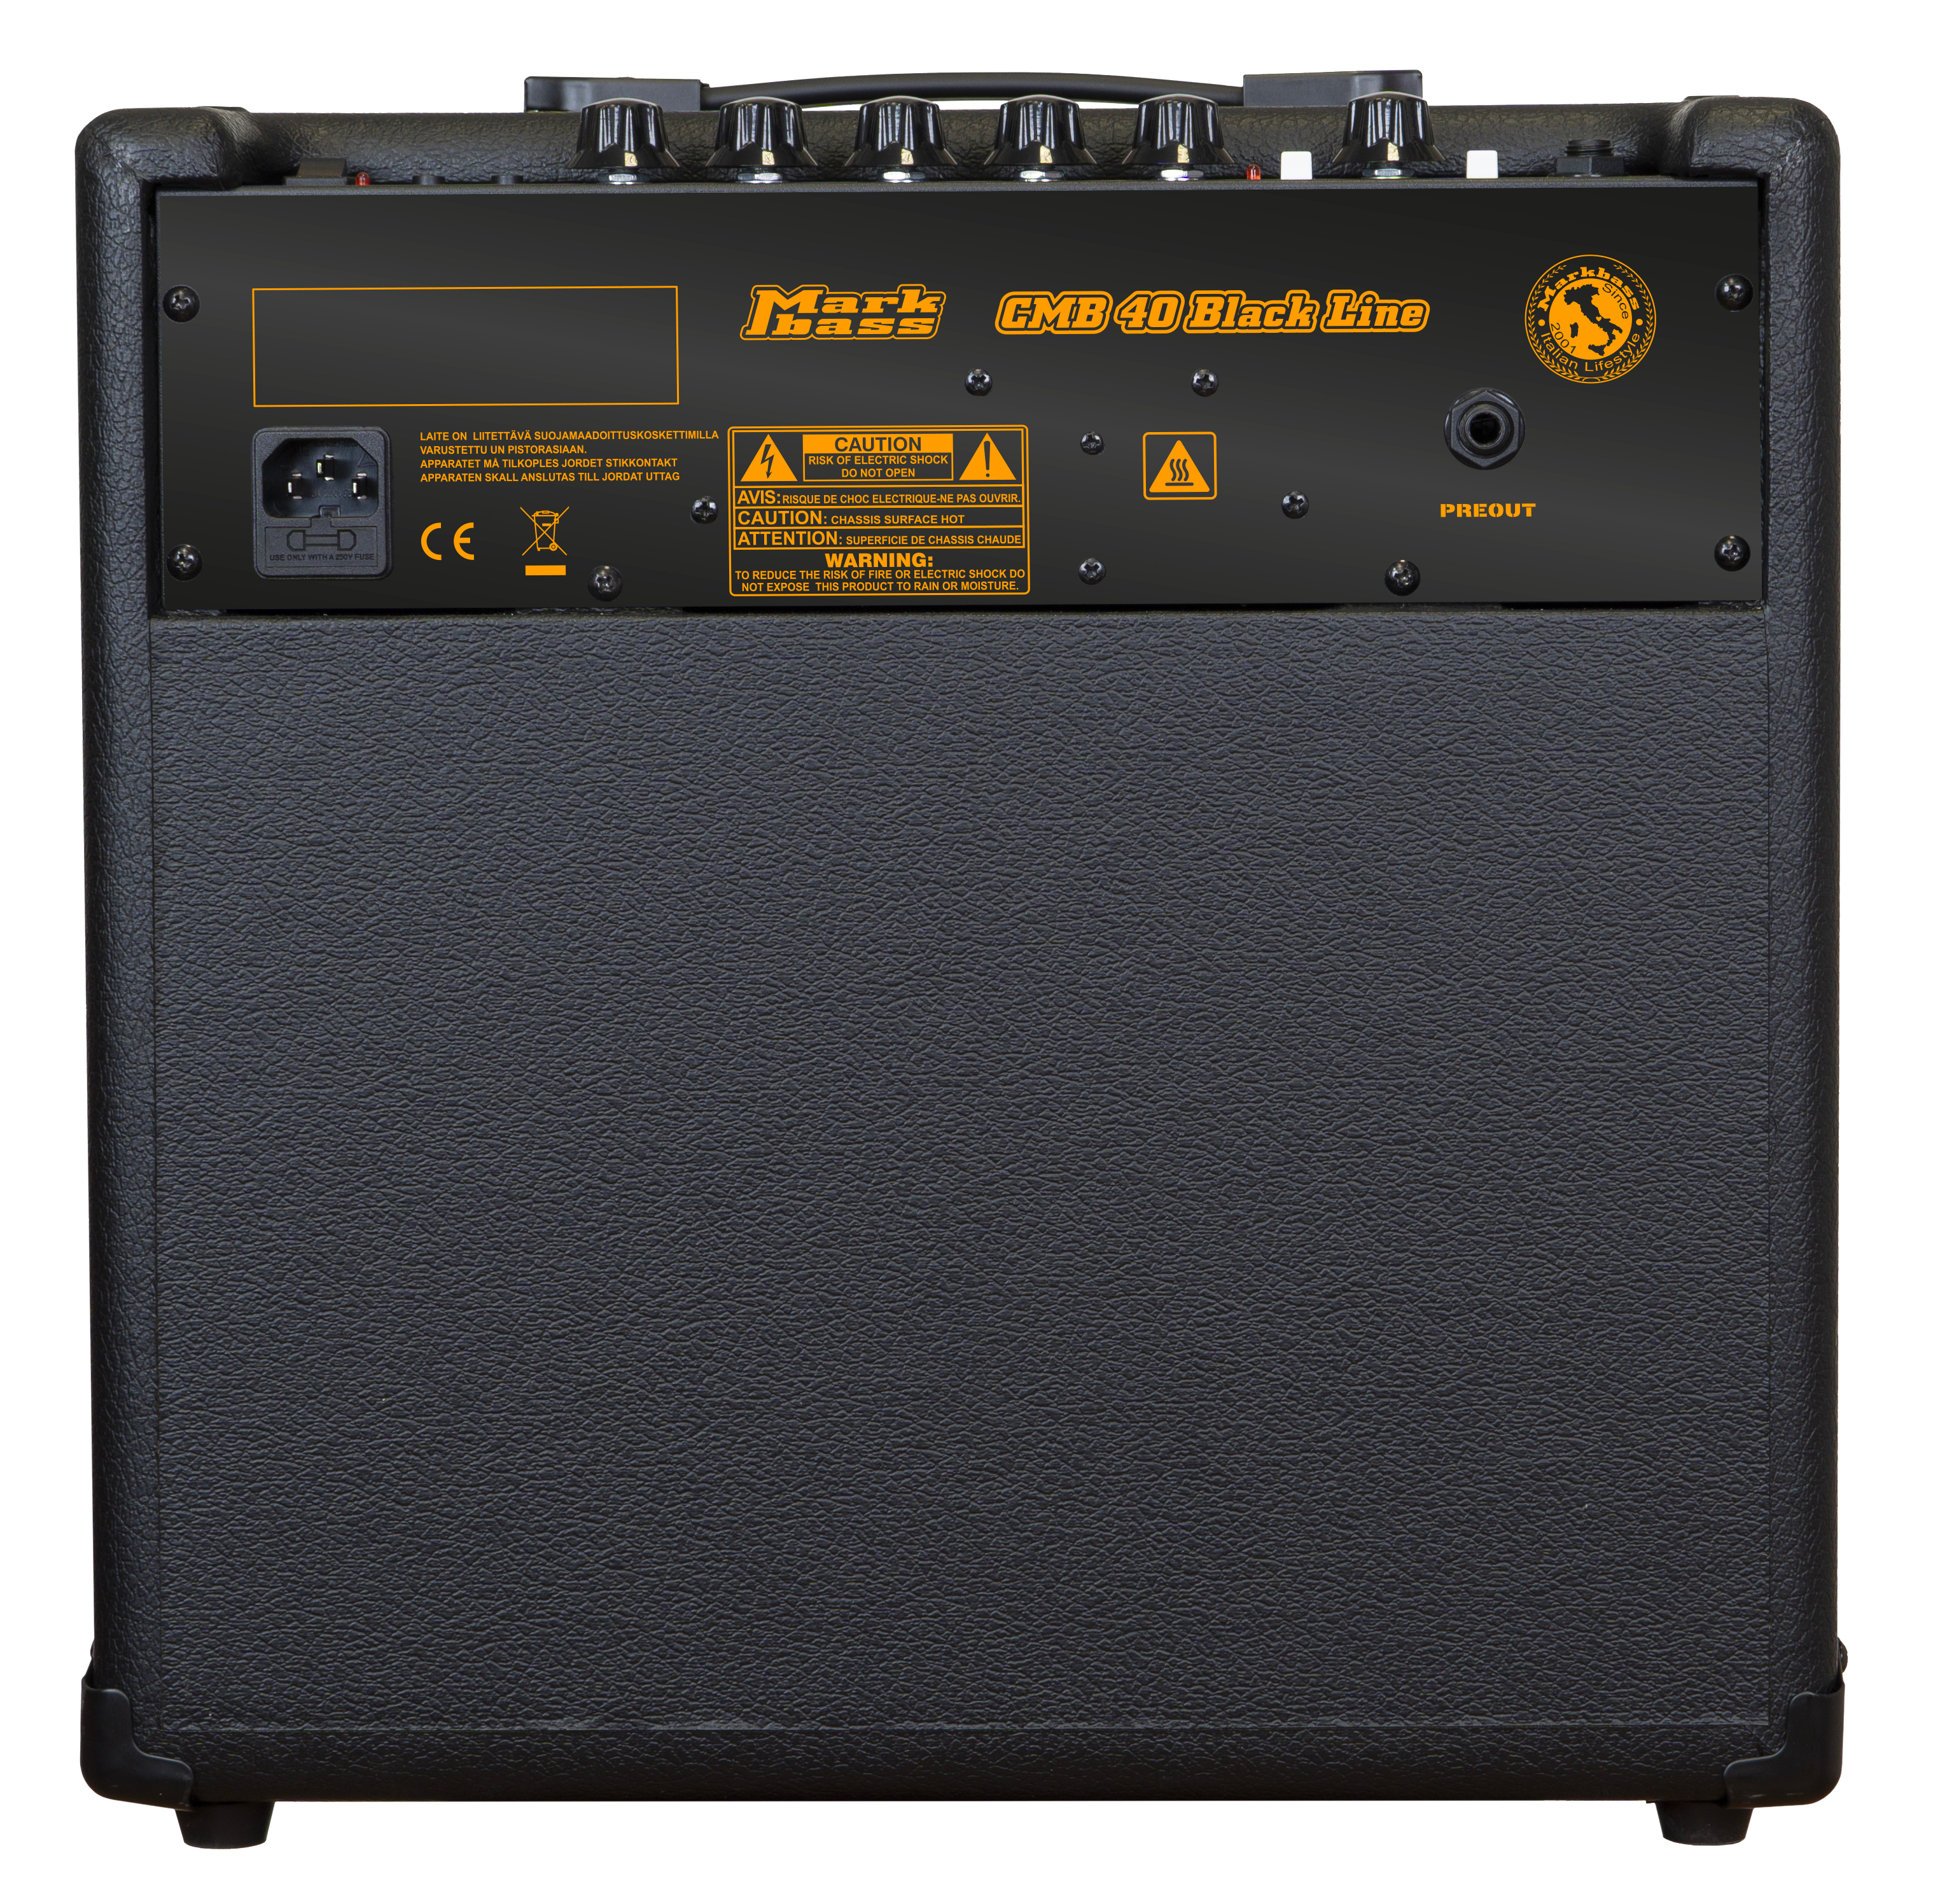 Markbass Cmb 101 Black Line Combo 40w 1x10 - Combo amplificador para bajo - Variation 1